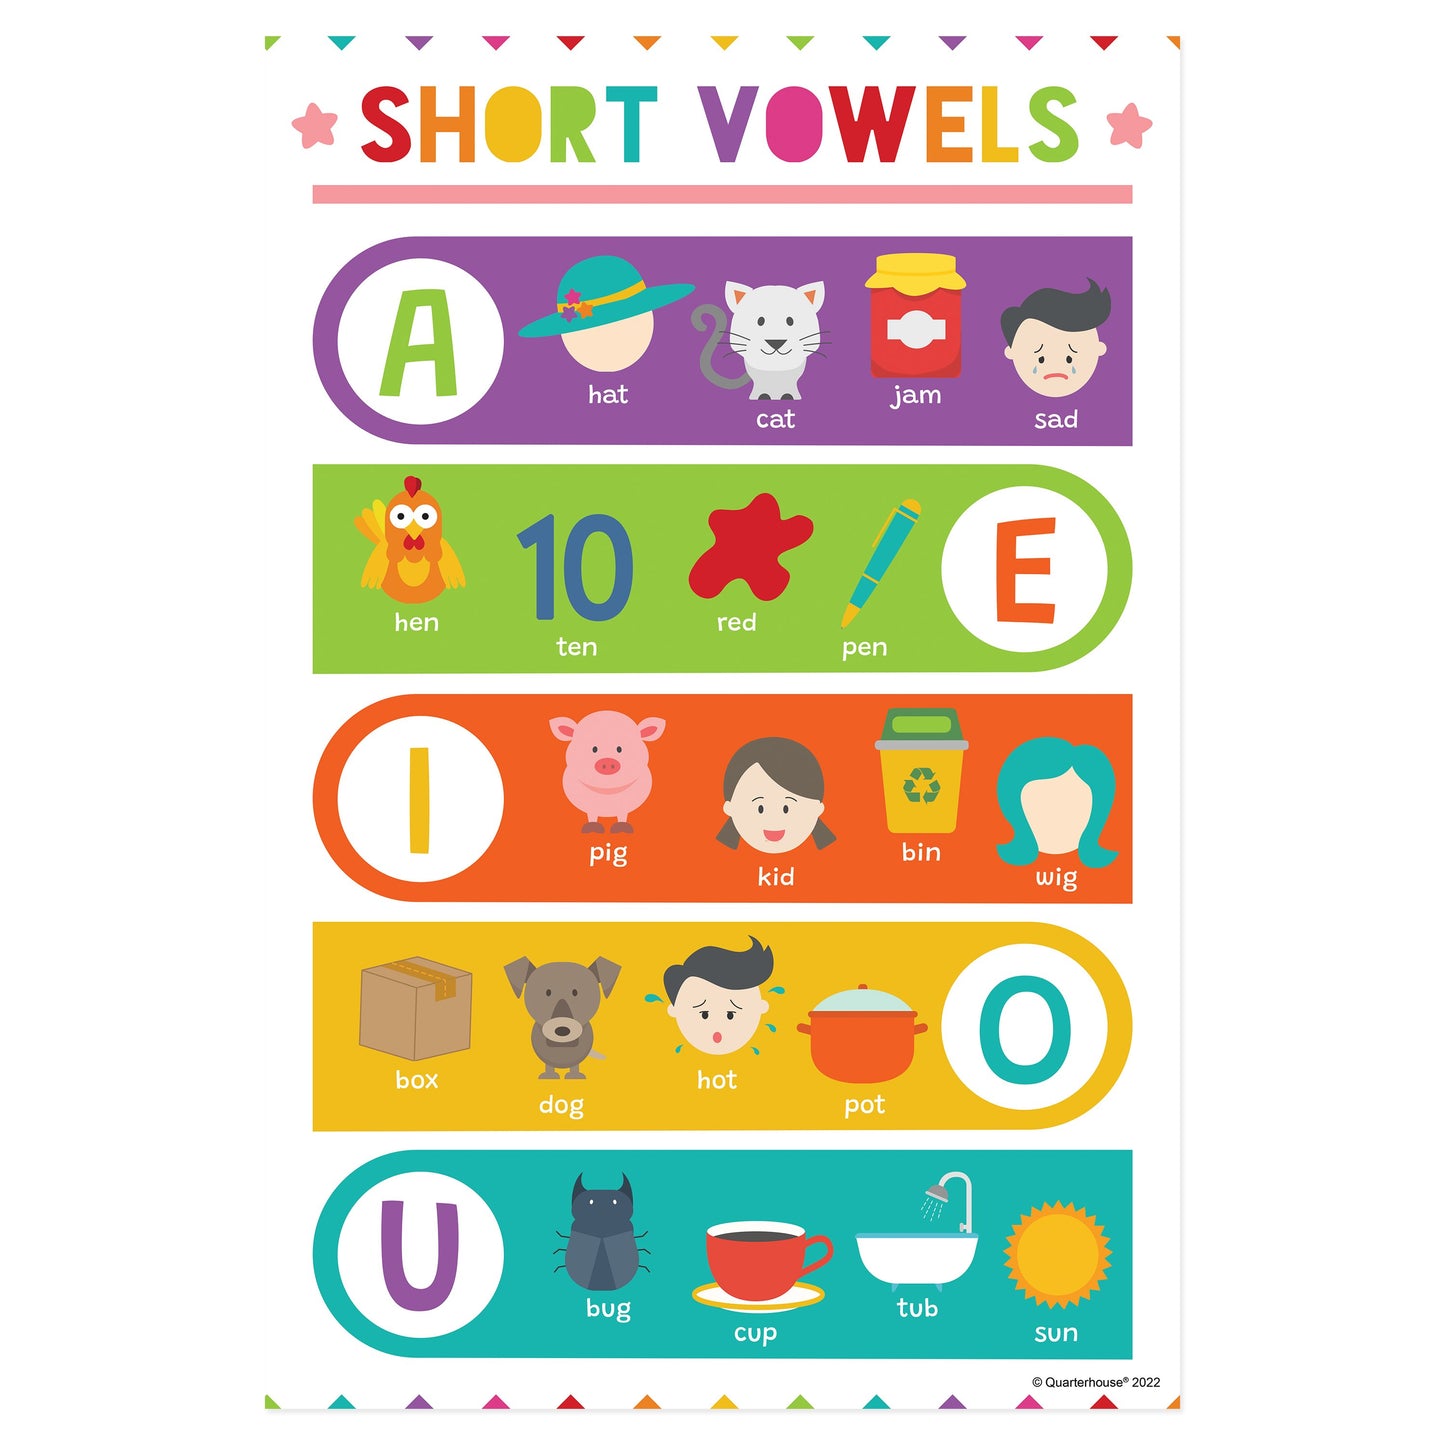 Quarterhouse Phonics - Short Vowels Poster, English-Language Arts Classroom Materials for Teachers